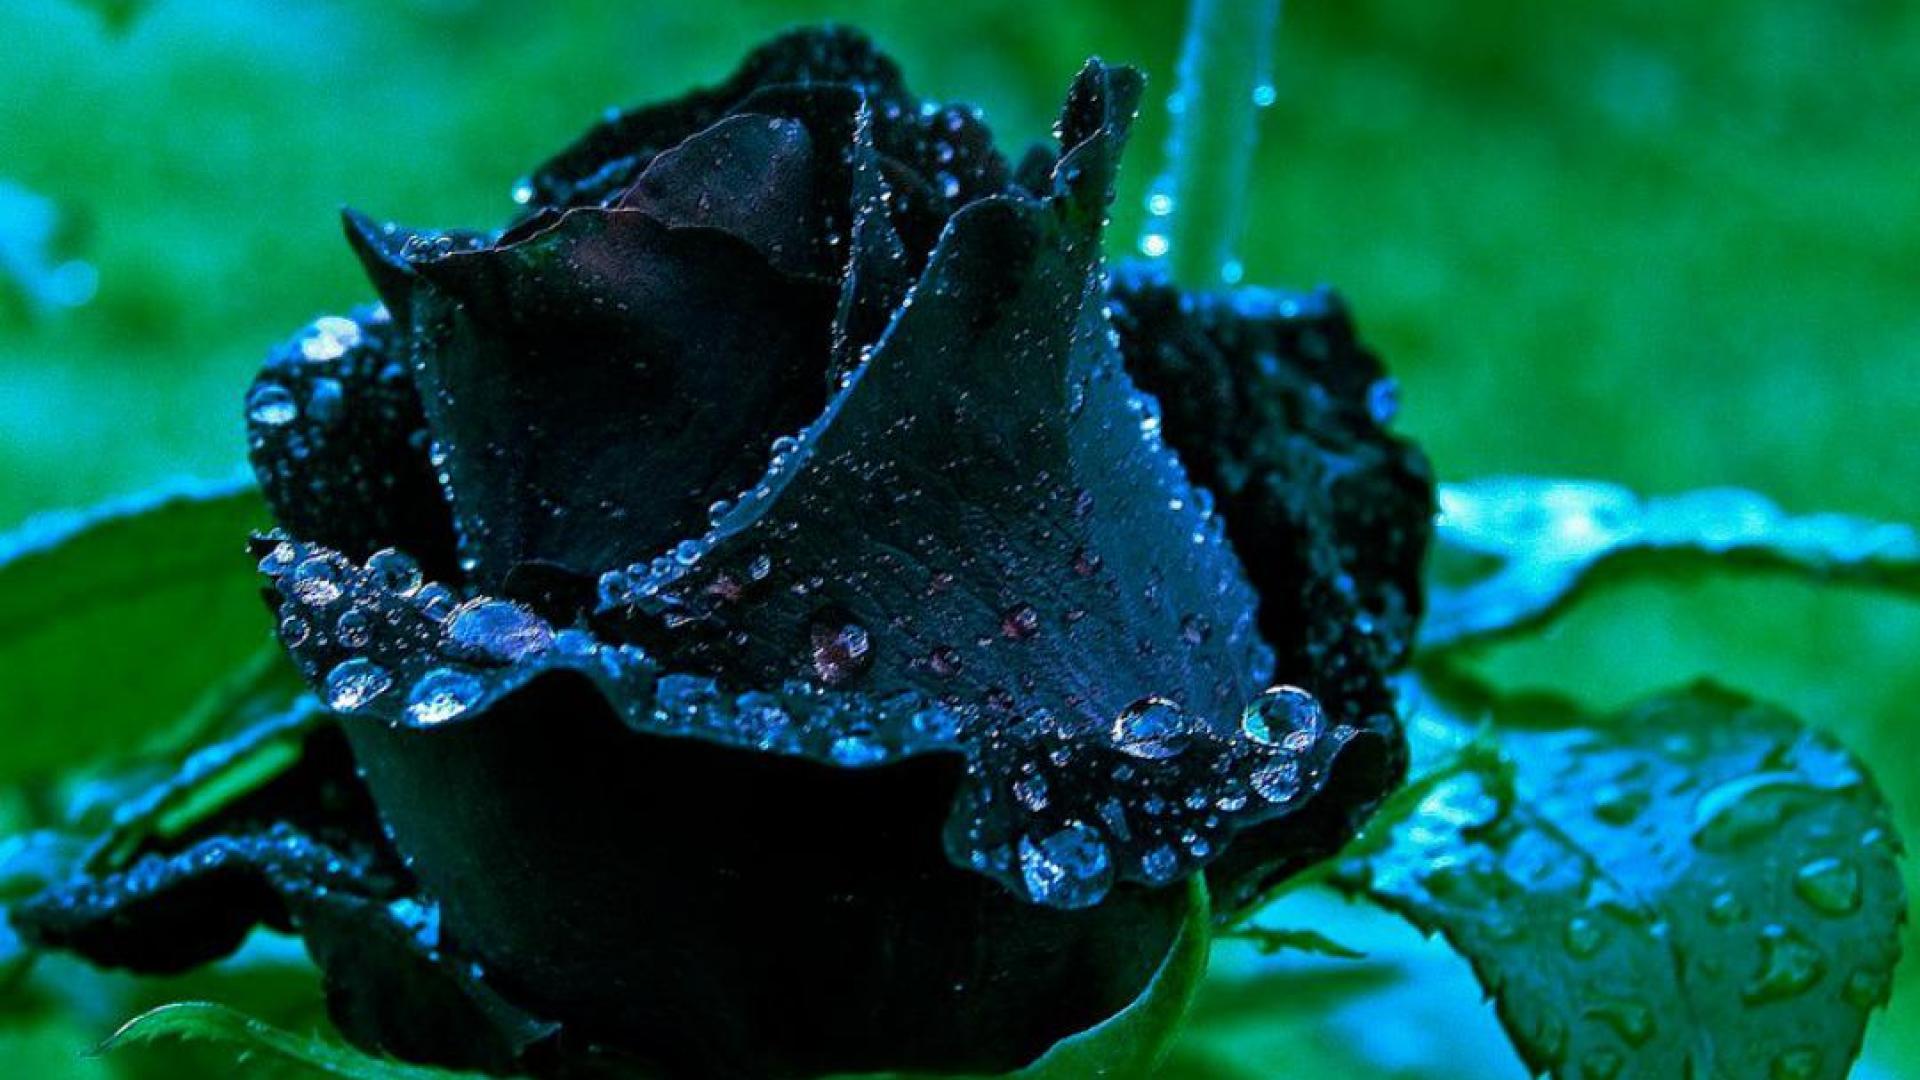 Black Rose Wallpaper Full Hd - Black Rose Wallpaper HD | PixelsTalk.Net - Find stunning rose